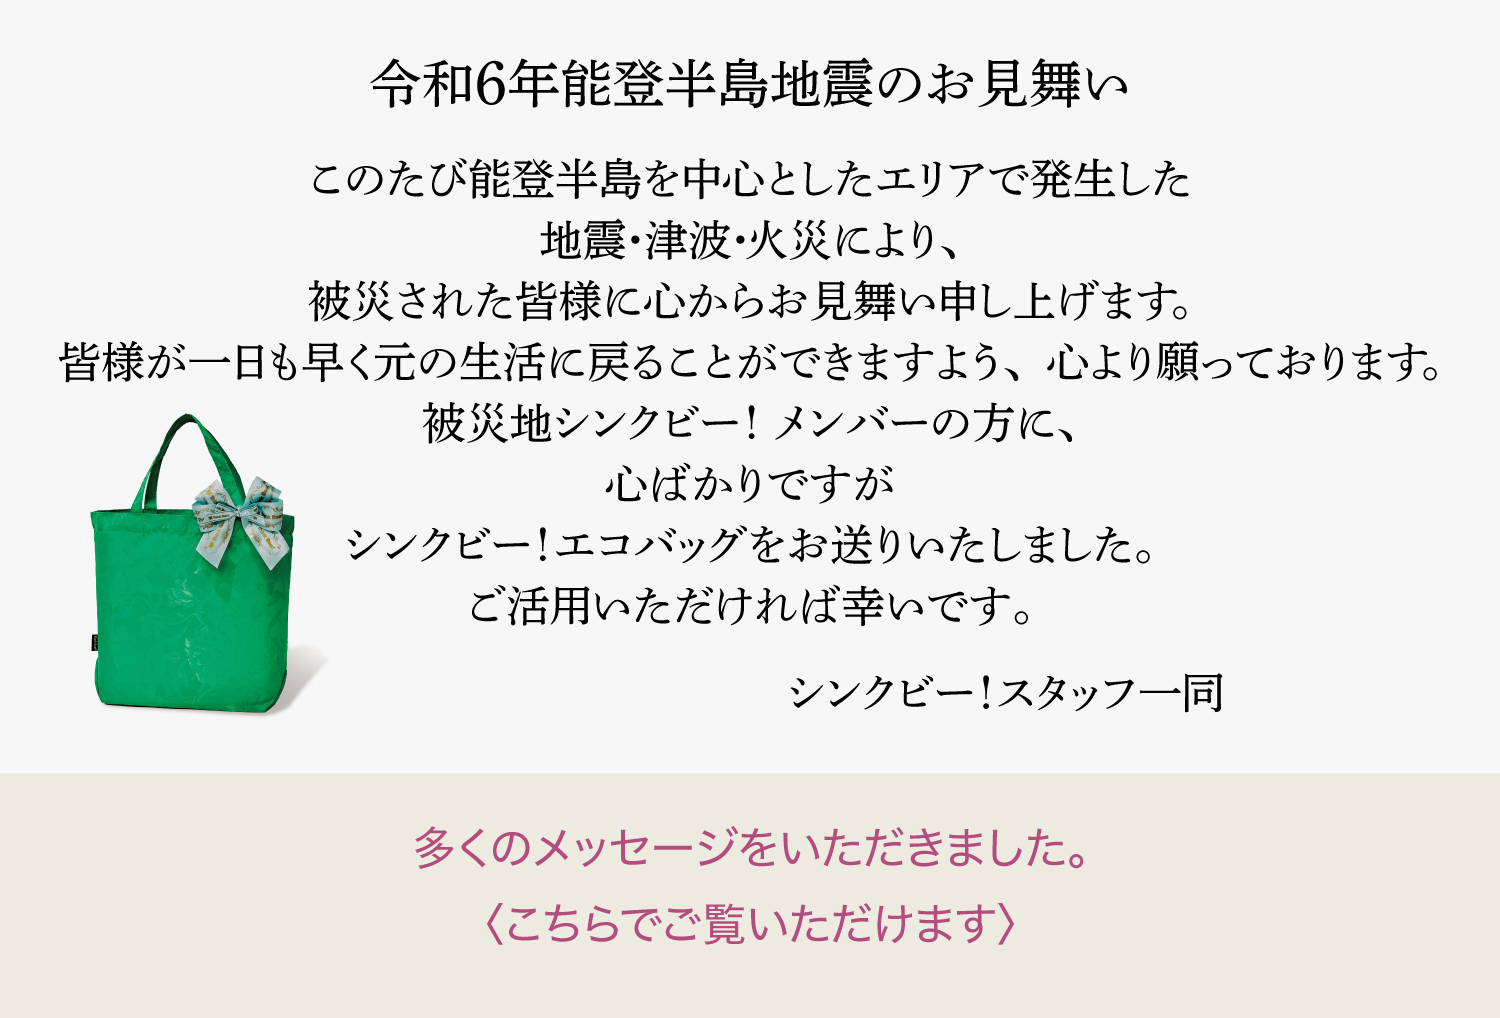 omimai_banner.jpg